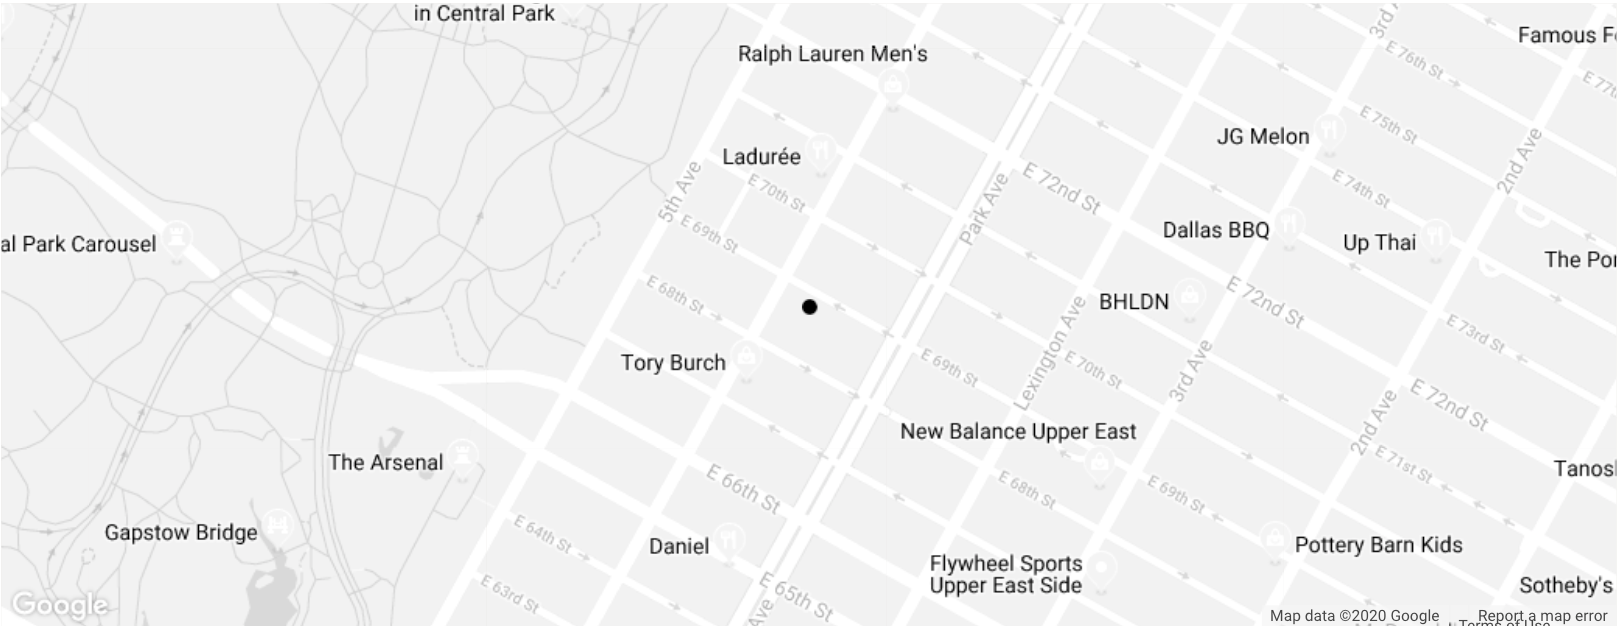 David Zwirner New York 69th Street Location